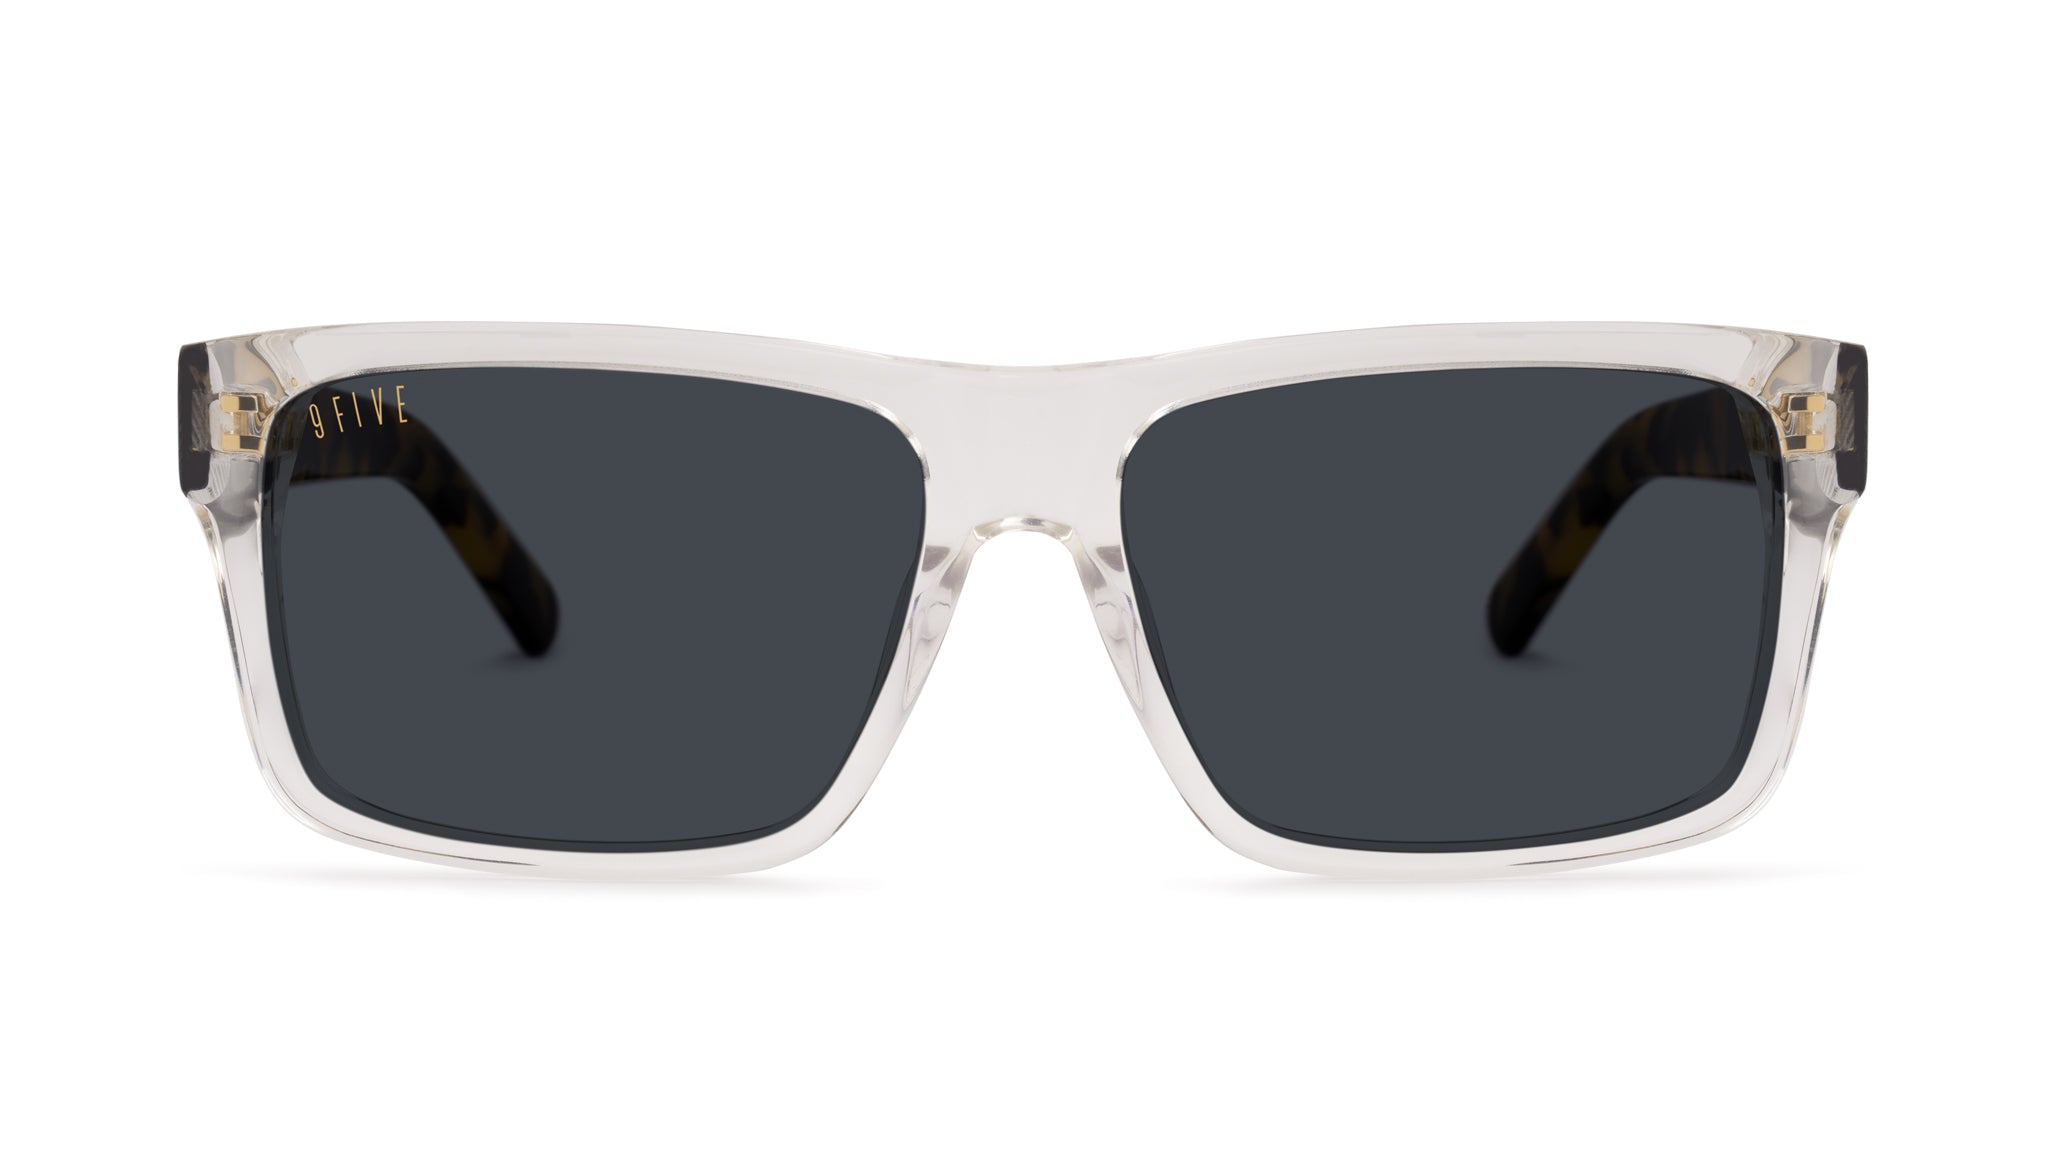 9FIVE Caps Oasis Sunglasses